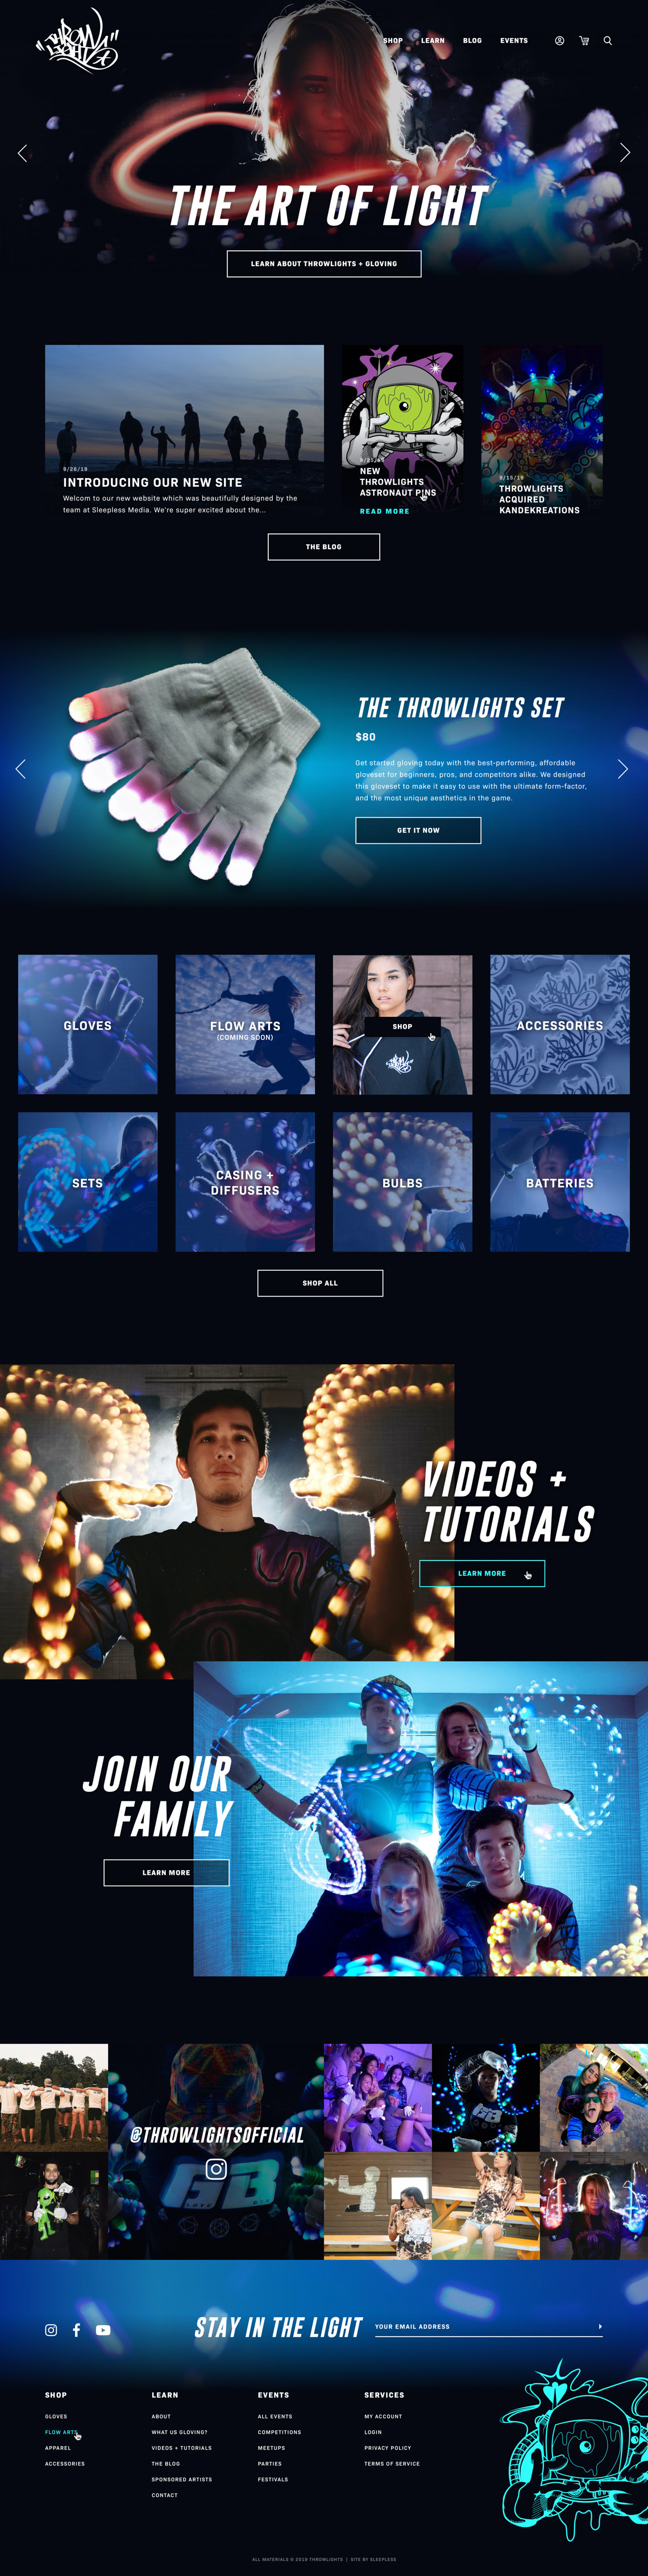 Throwlights - Homepage